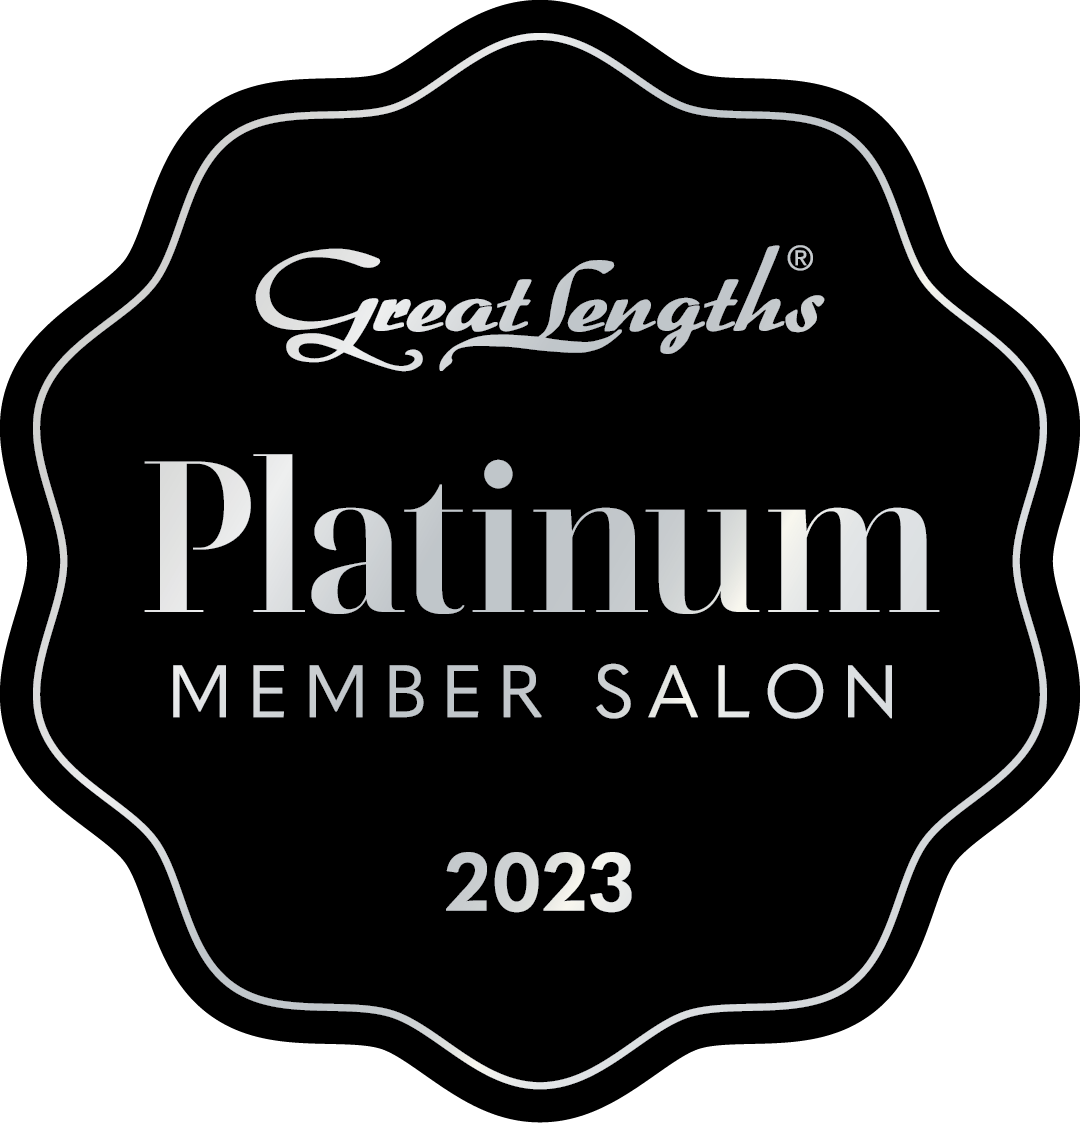 Great Lengths Platinum Member Salon 2023